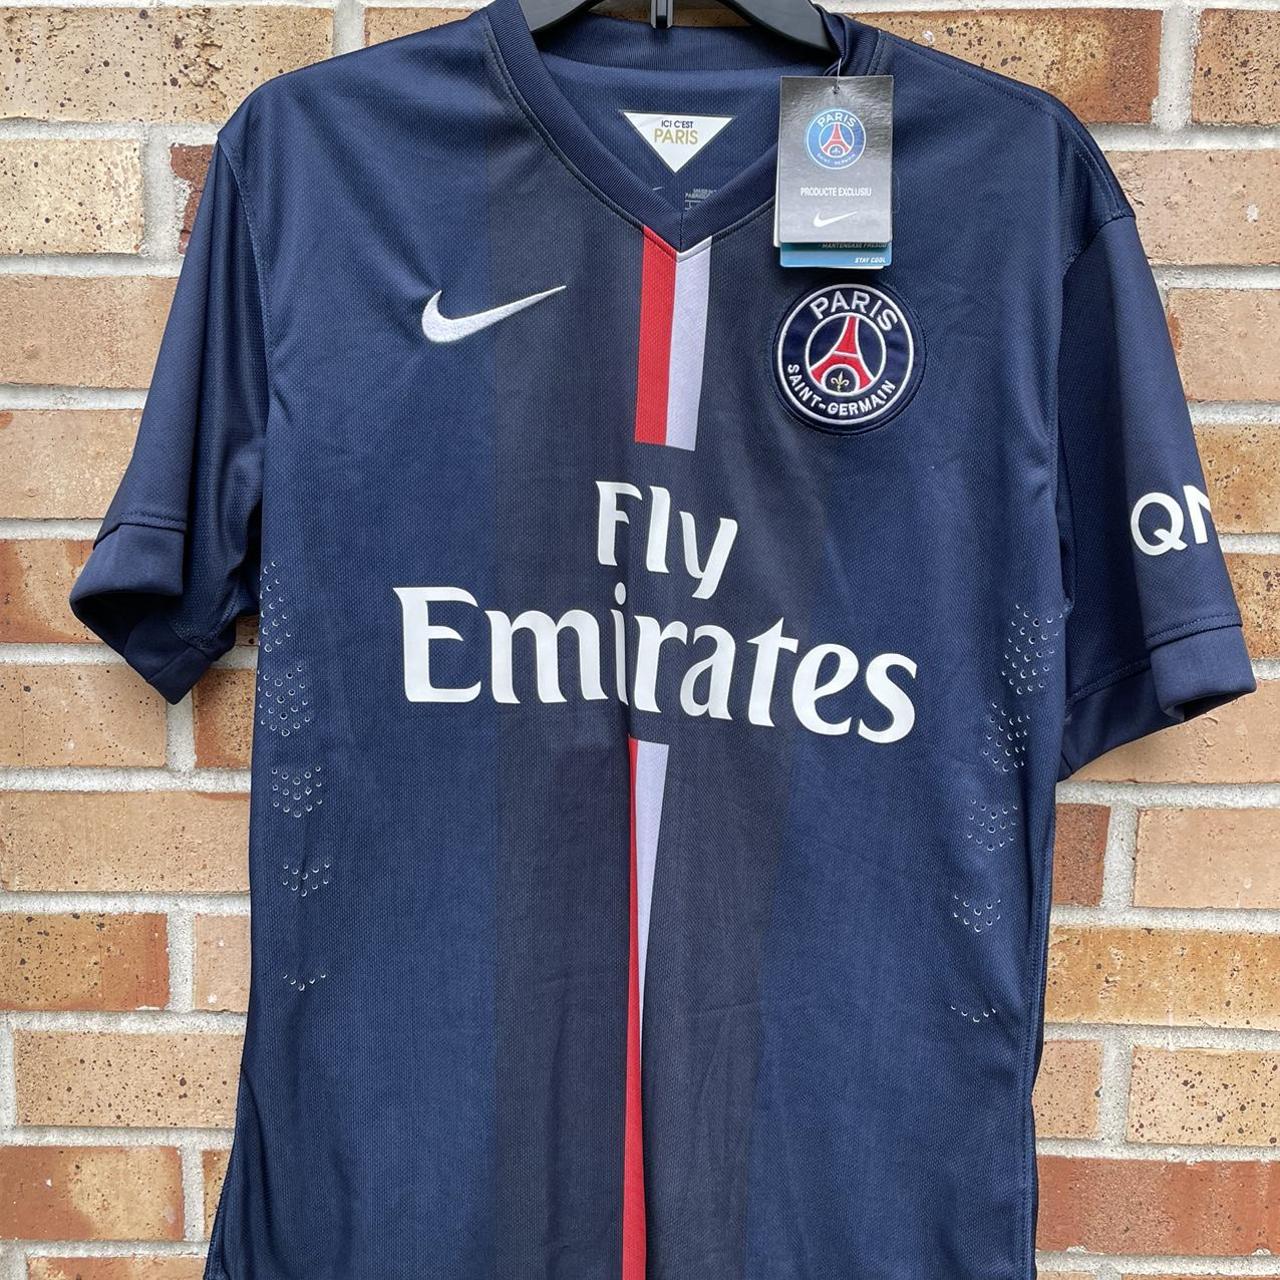 Product Image 1 - Paris Saint Germain Jersey
By Nike
Players